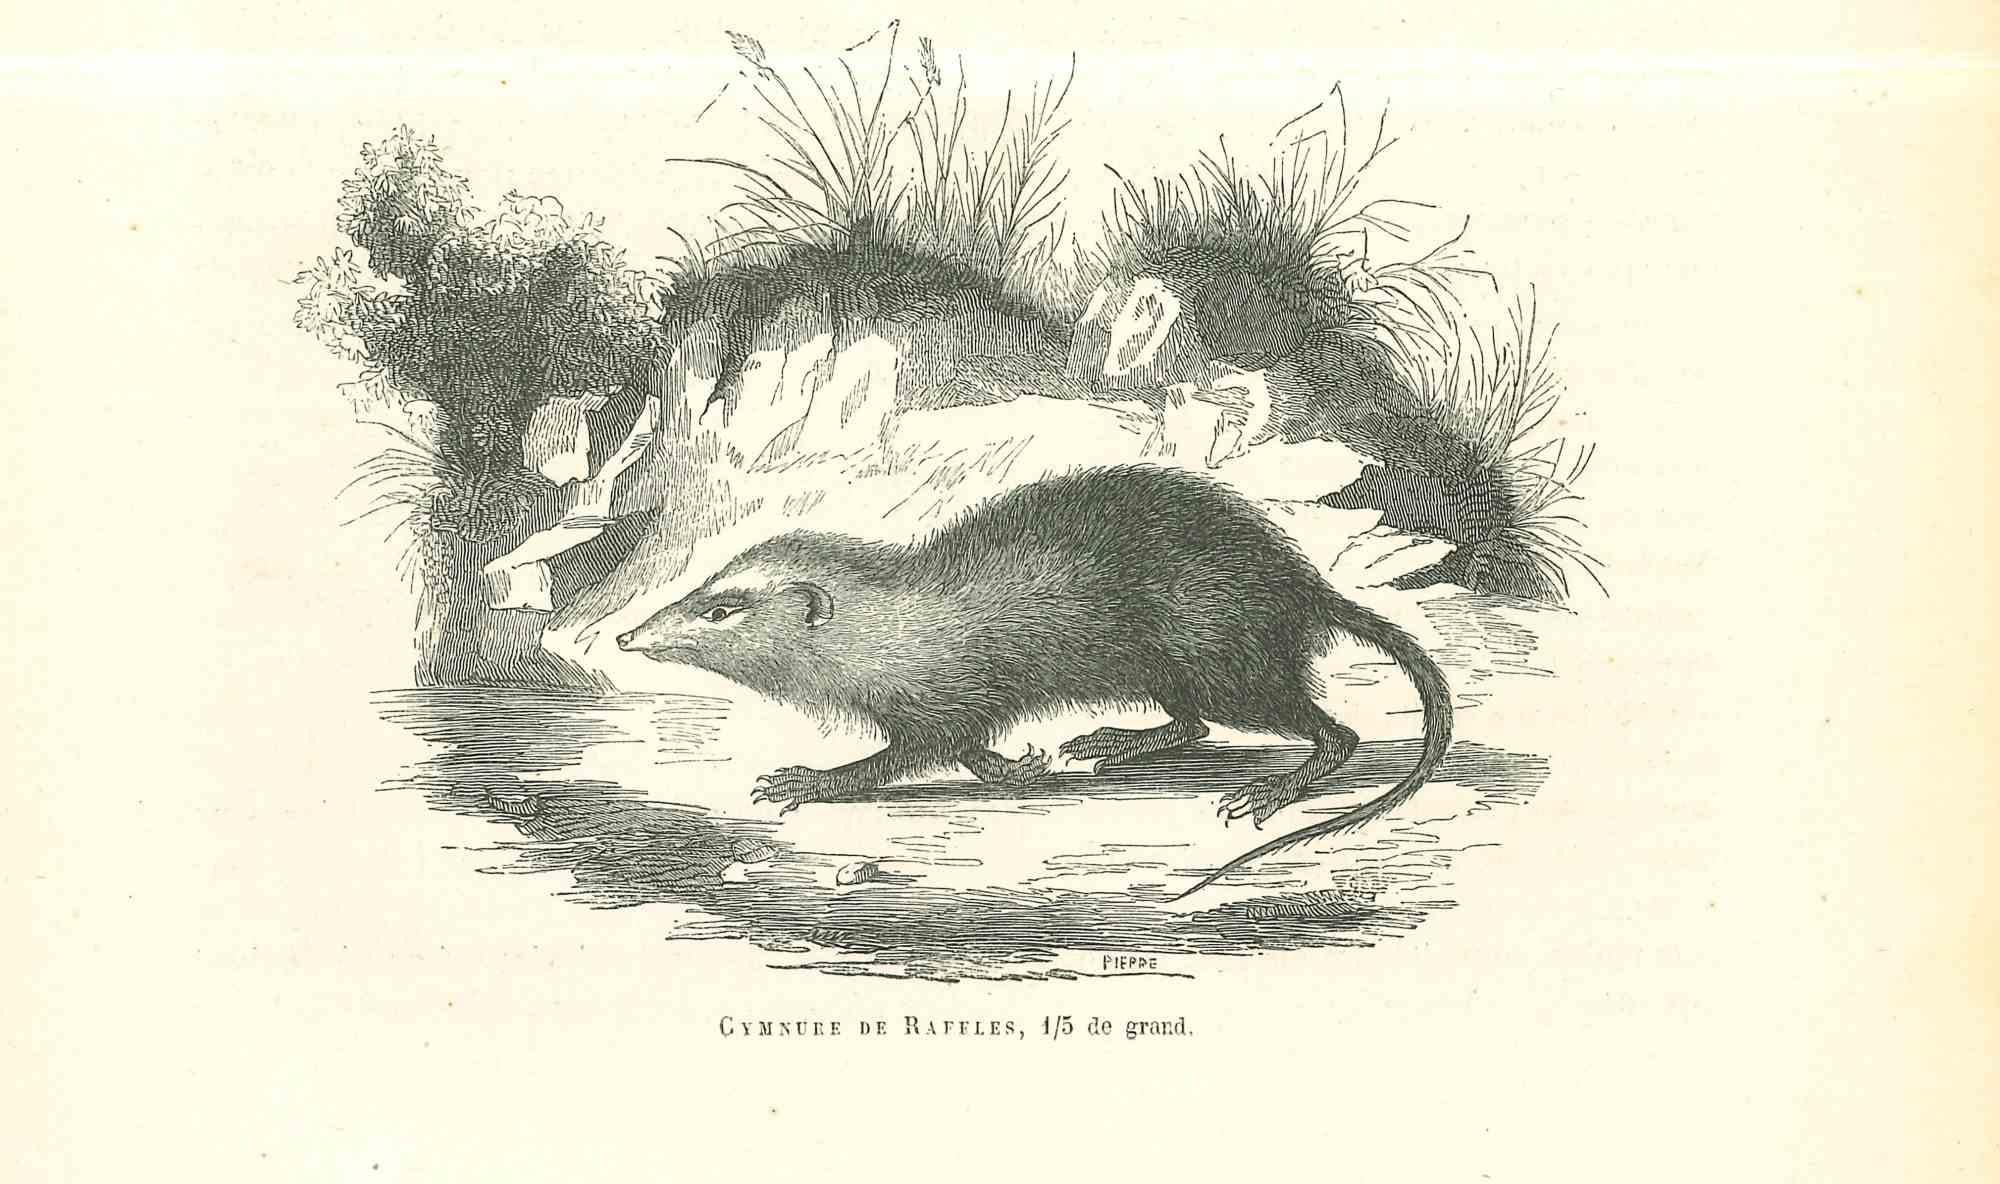 The Rat - Original Lithograph by Paul Gervais - 1854